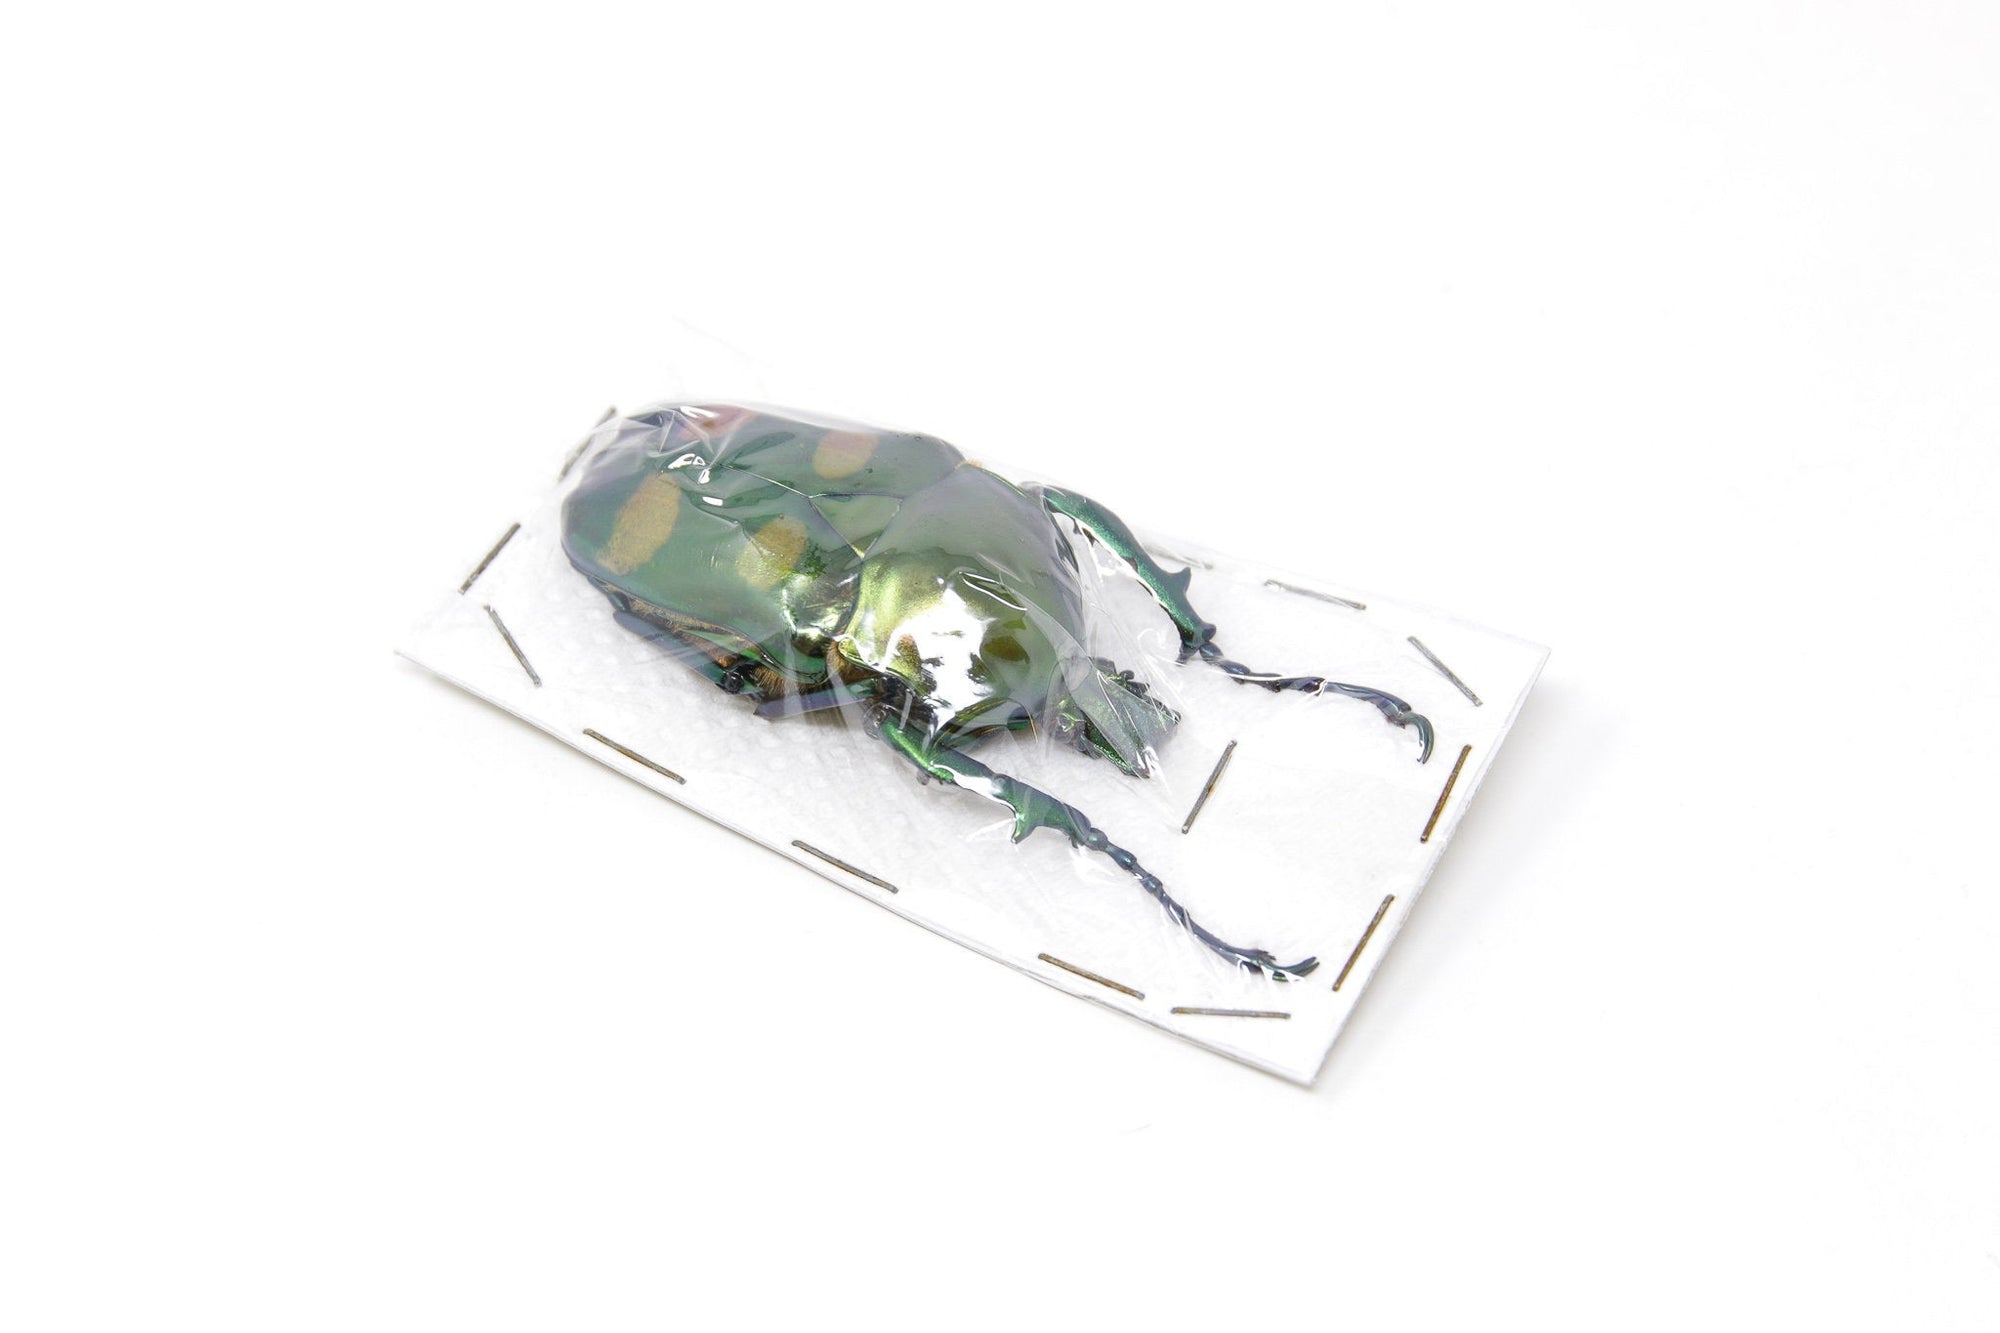 Jumnos ruckeri ruckeri 54.5mm A1 | Thailand Flower Beetle, Entomology Specimen